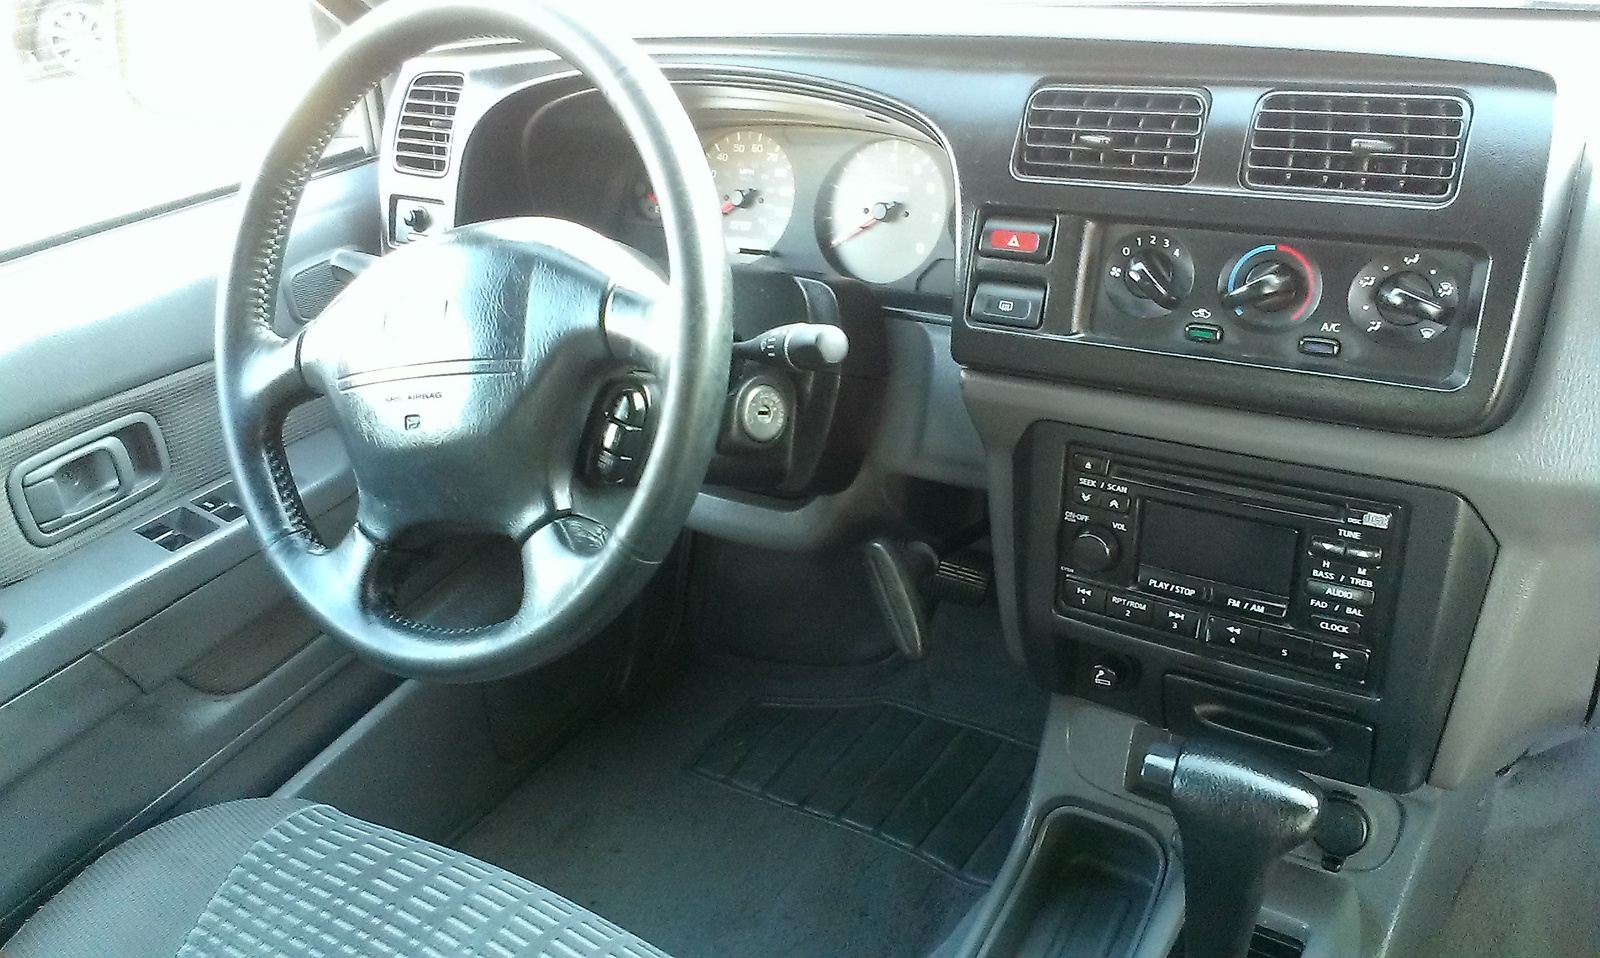 2000 Nissan xterra interior #1